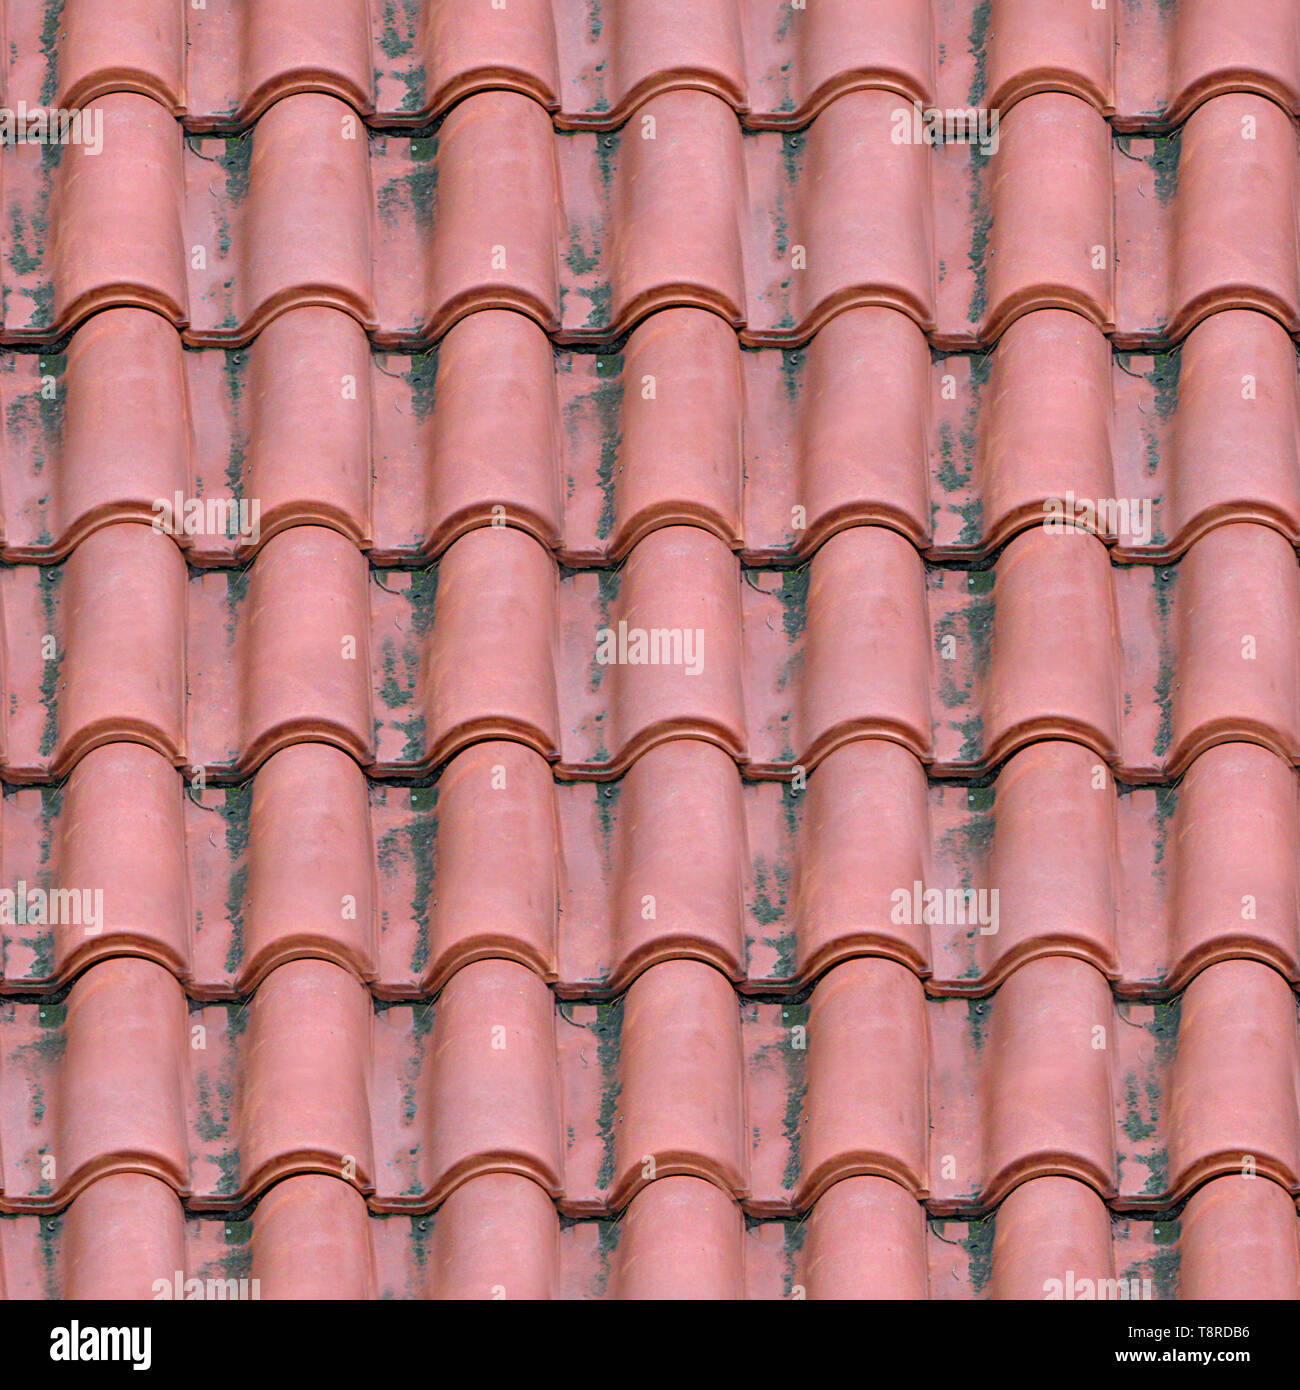 Spanish Tile Roofing Seamless Texture Tile Stock Photo